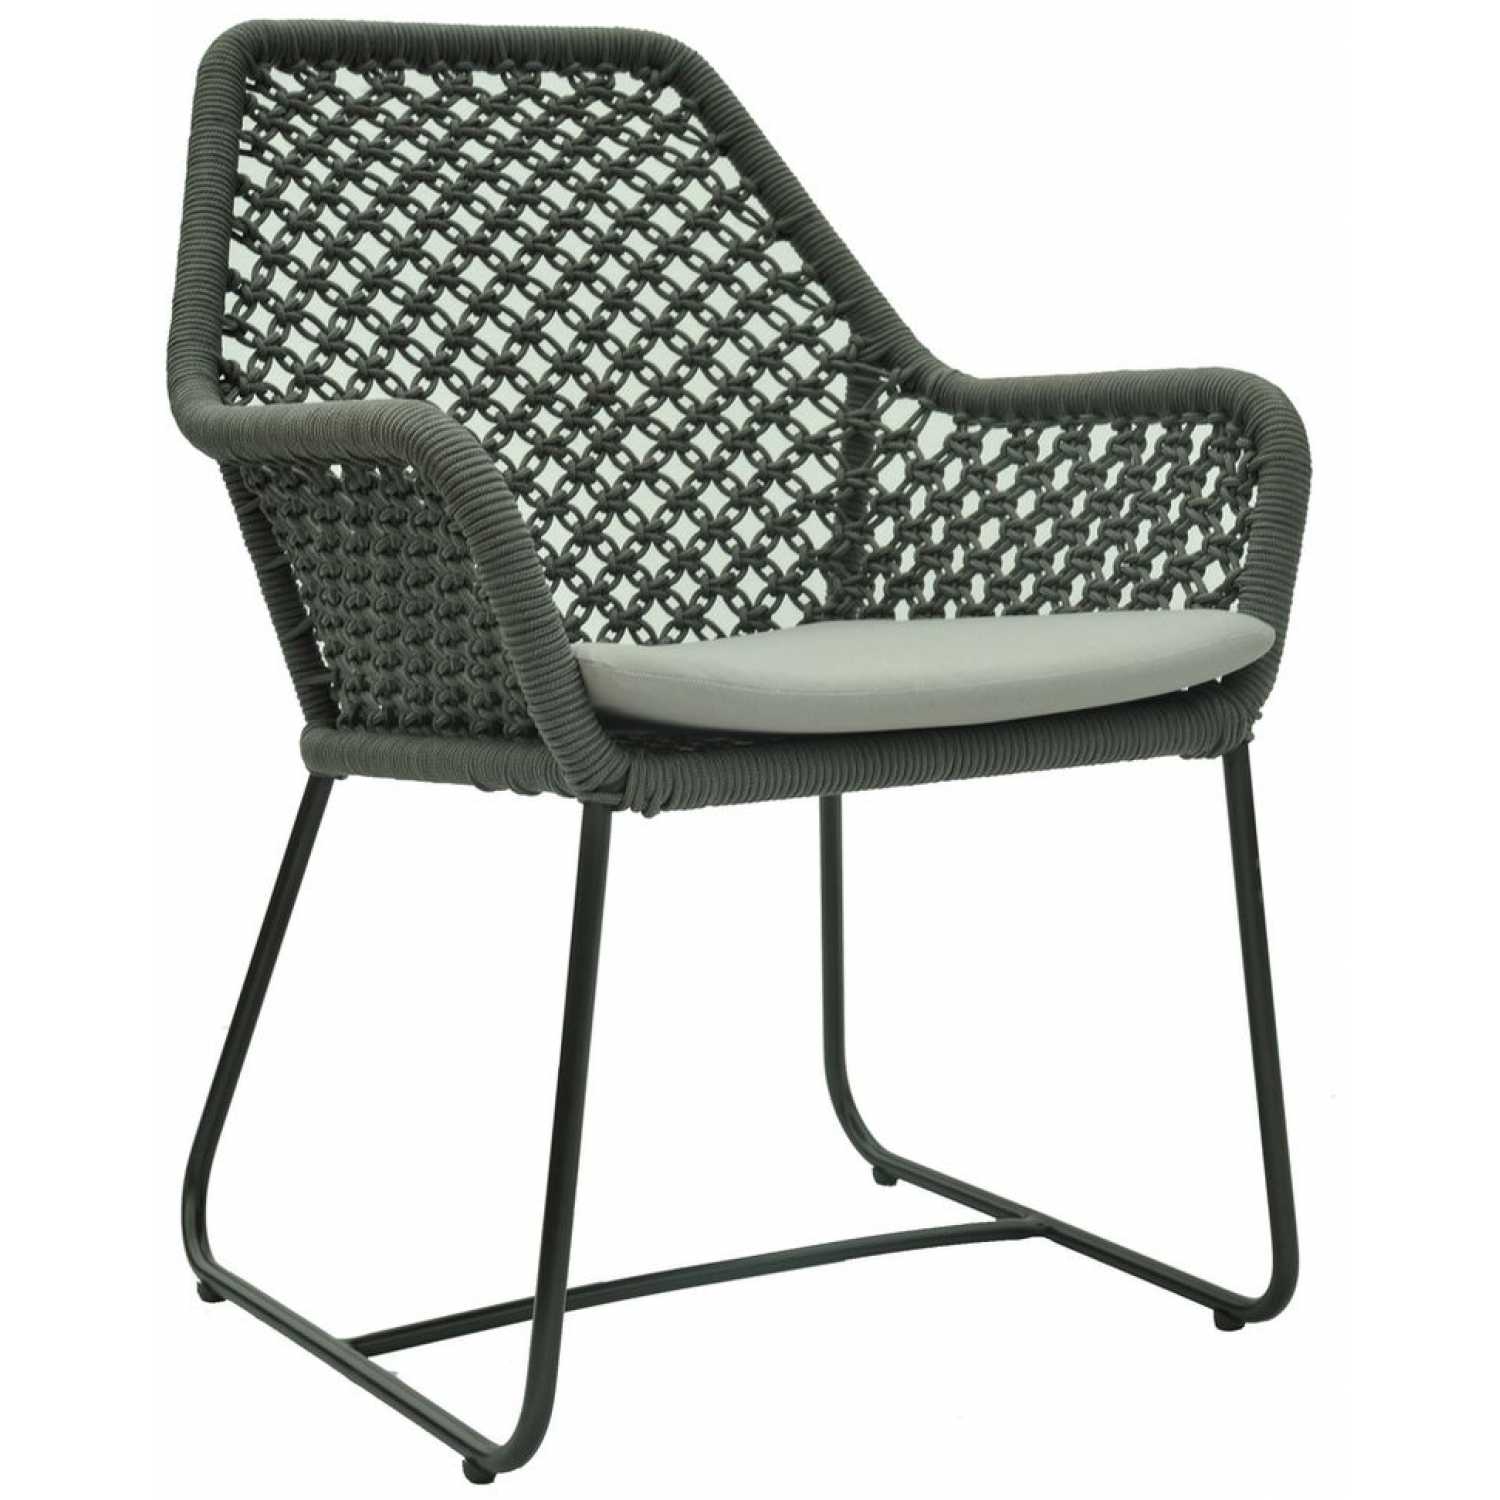 Kona Dining Chair - PadioLiving - Kona Dining Chair - Outdoor Dining Chair - PadioLiving